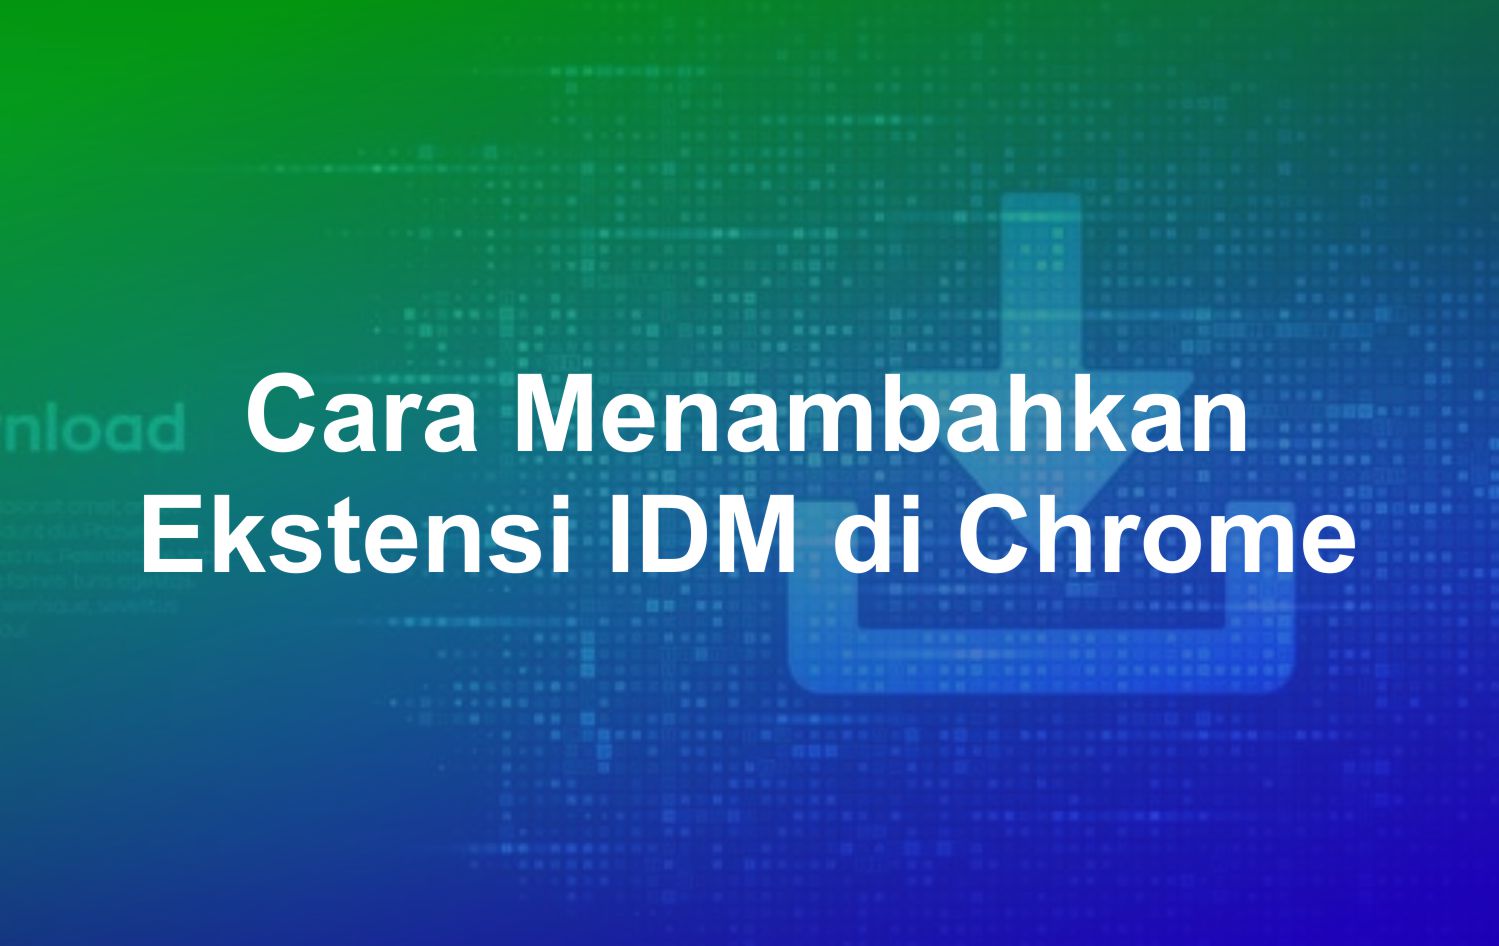 Cara Menggunakan Idm Di Chrome. Cara Menambahkan Ekstensi IDM di Chrome Dengan Mudah